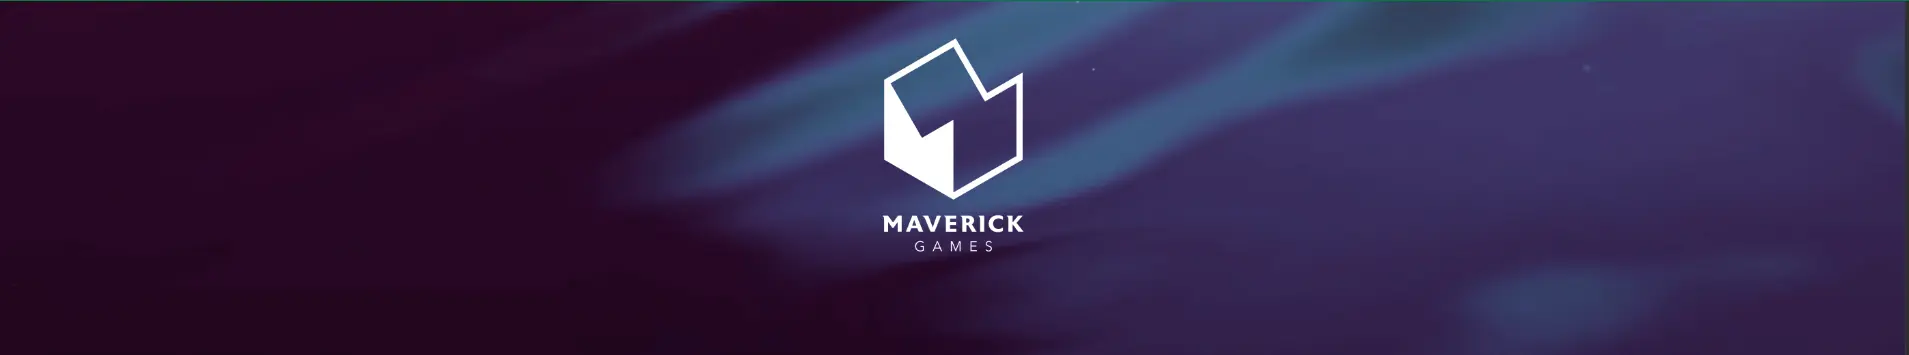 maverick-games-fb-logo